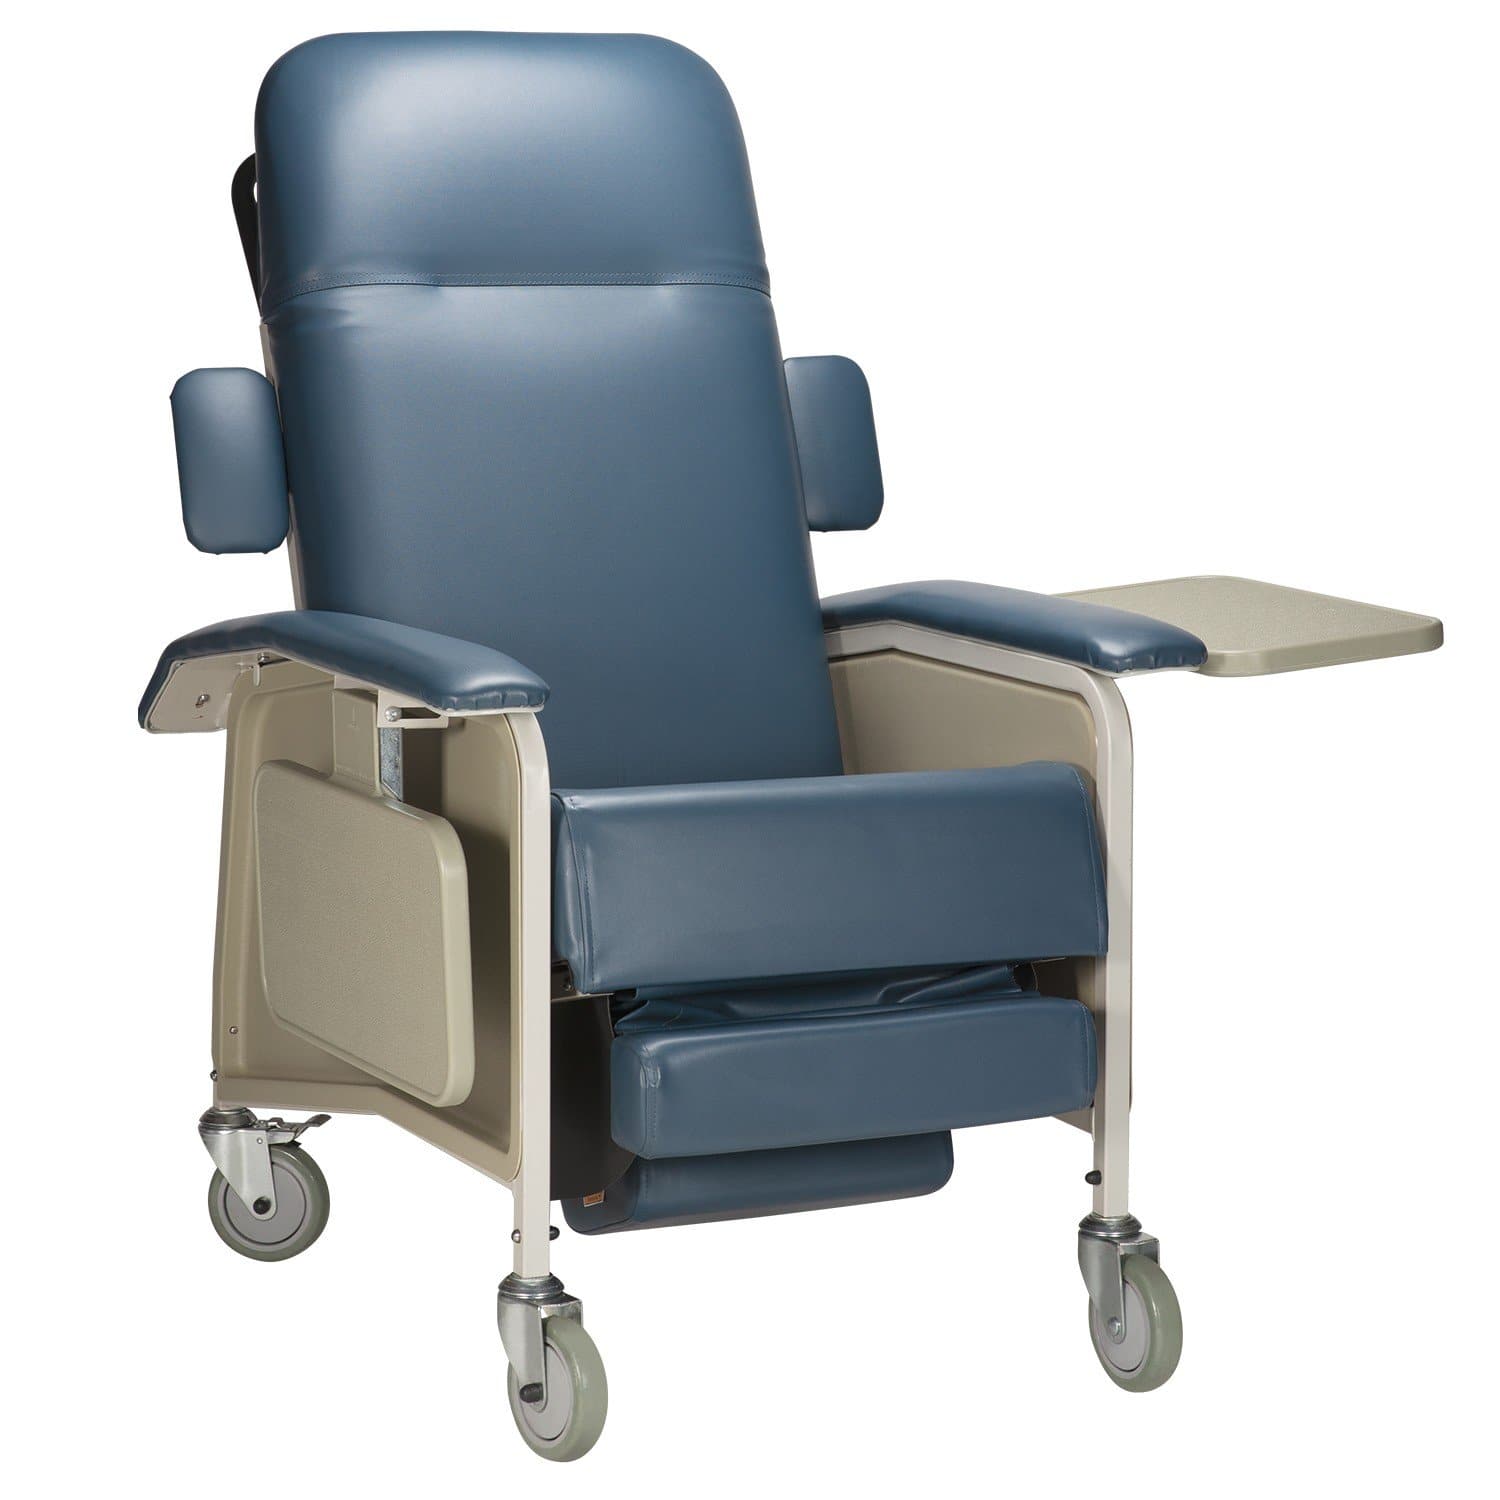 Dynarex Infinite Position Geri Chair Clinical Recliners - Senior.com Geri Chairs